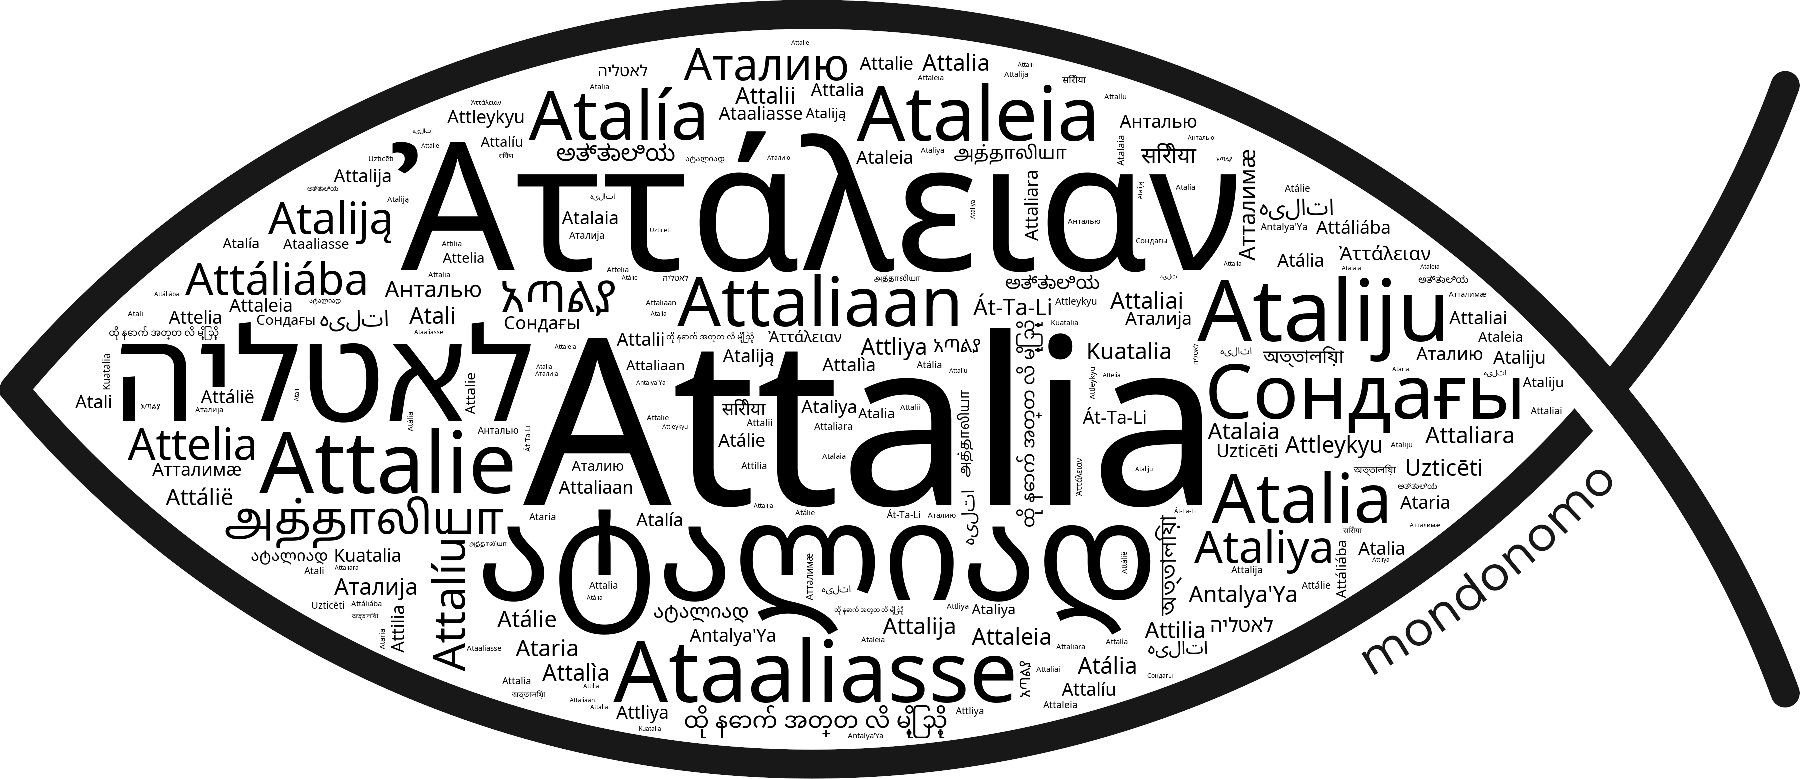 Name Attalia in the world's Bibles